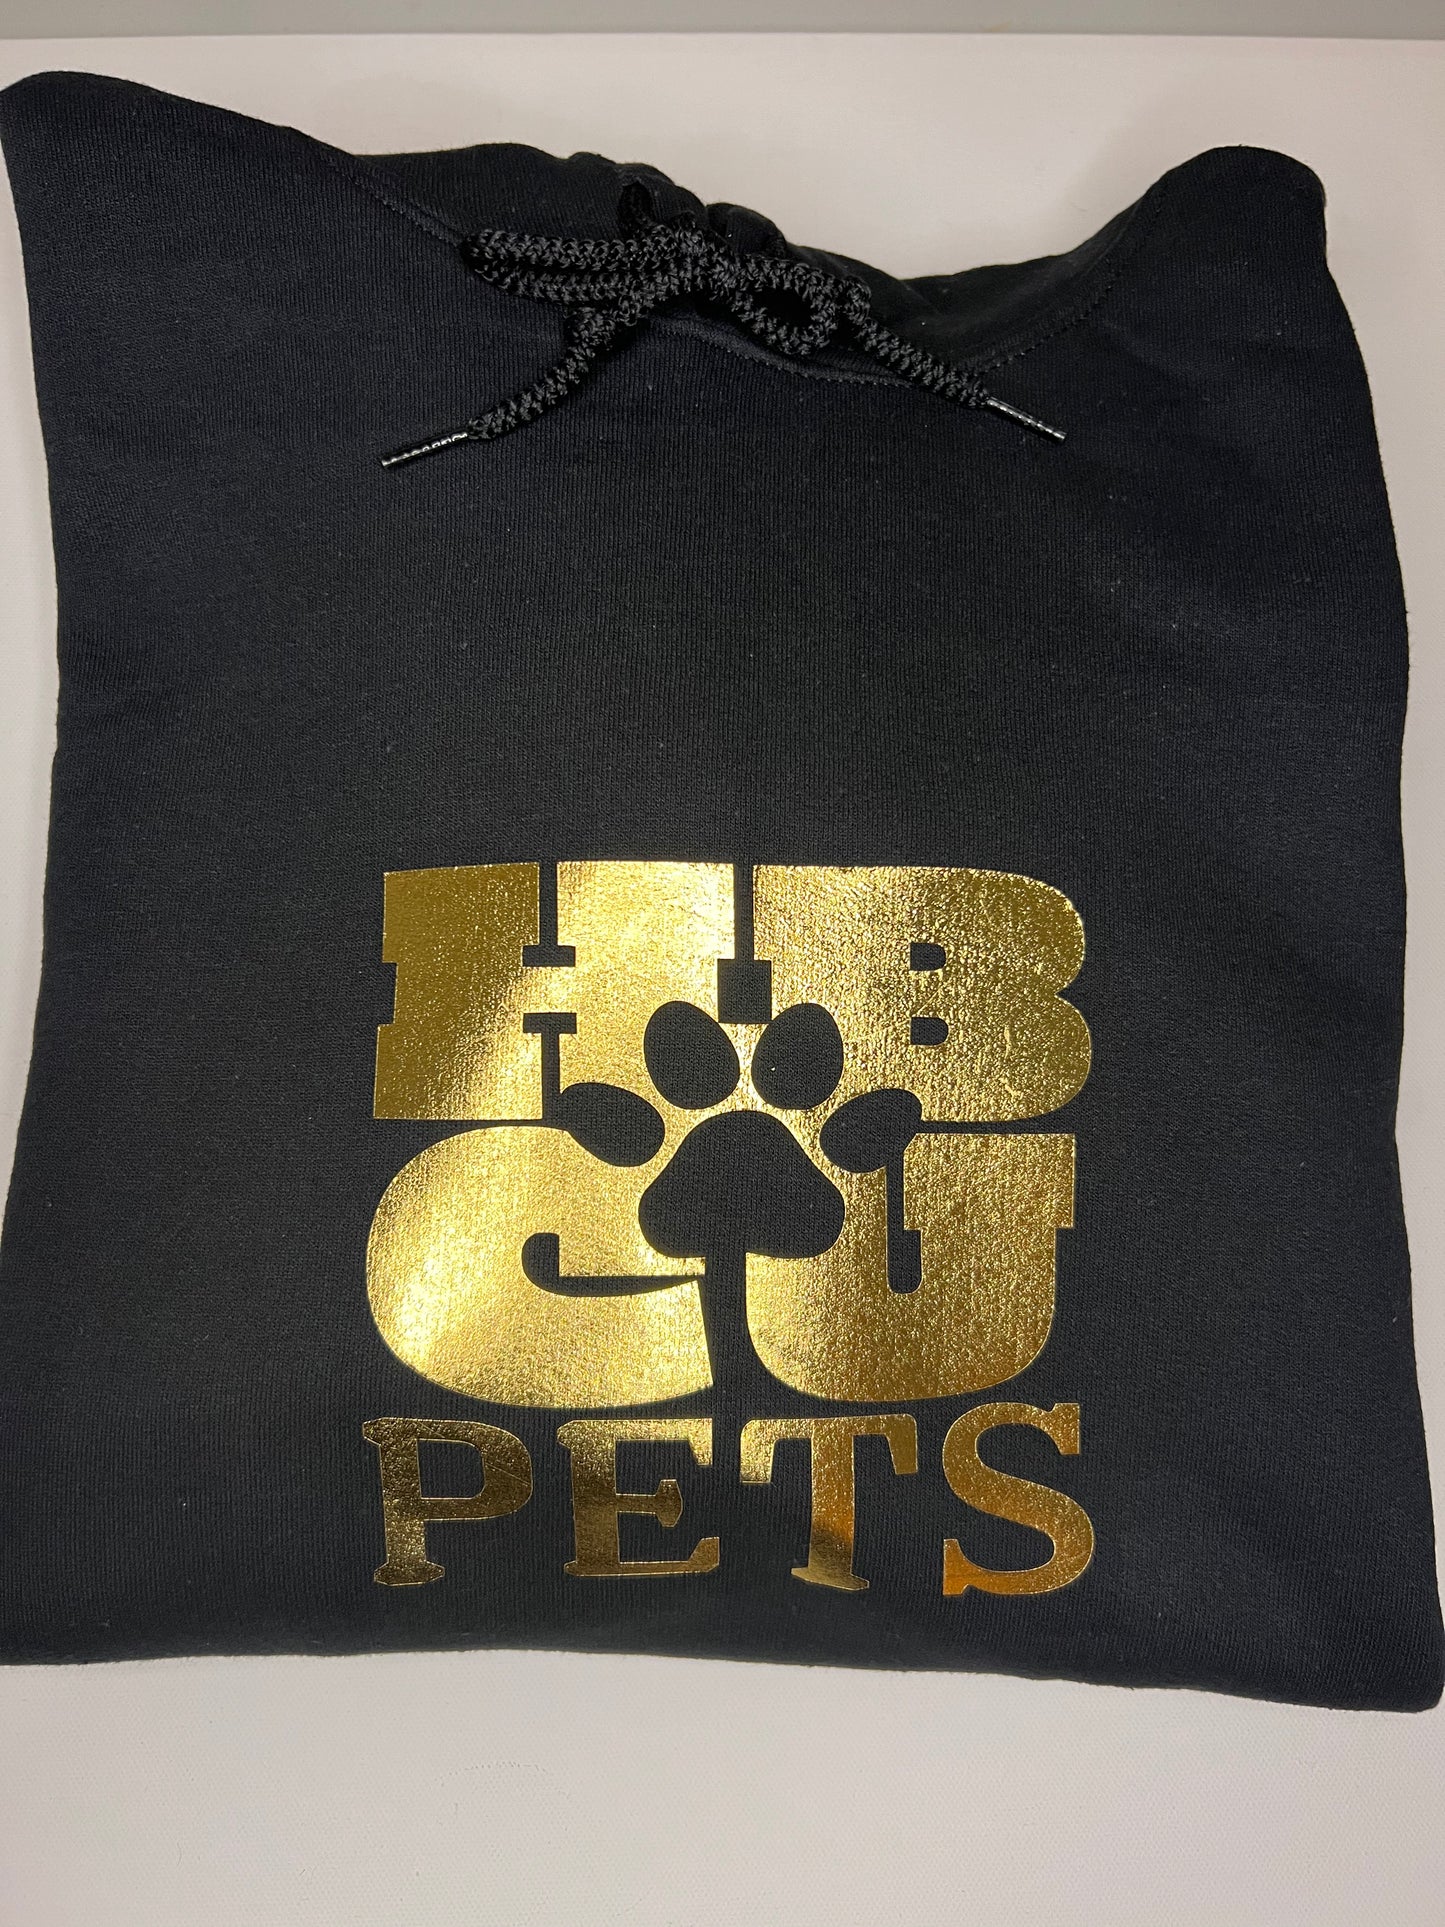 HBCU Pets Human Hoodies